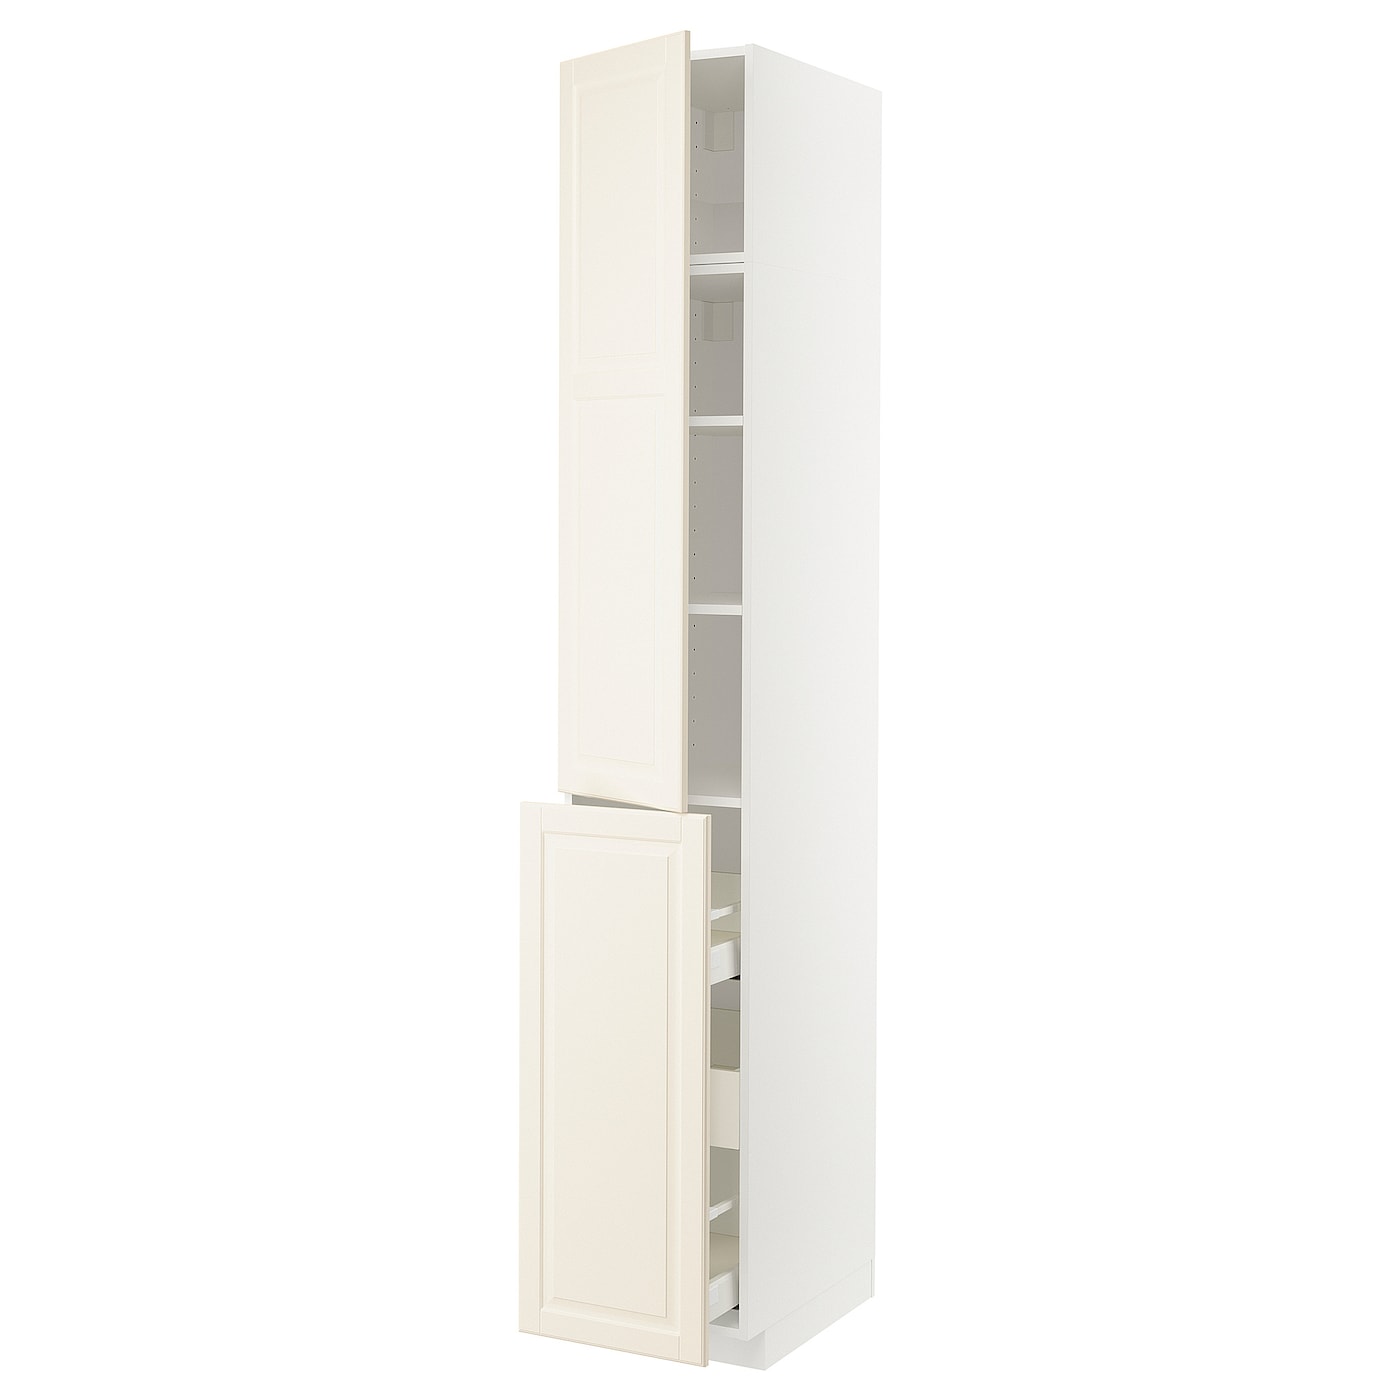 Шкаф - METOD / MAXIMERA  IKEA/ МЕТОД/МАКСИМЕРА  ИКЕА,  248х40 см, кремовый/белый